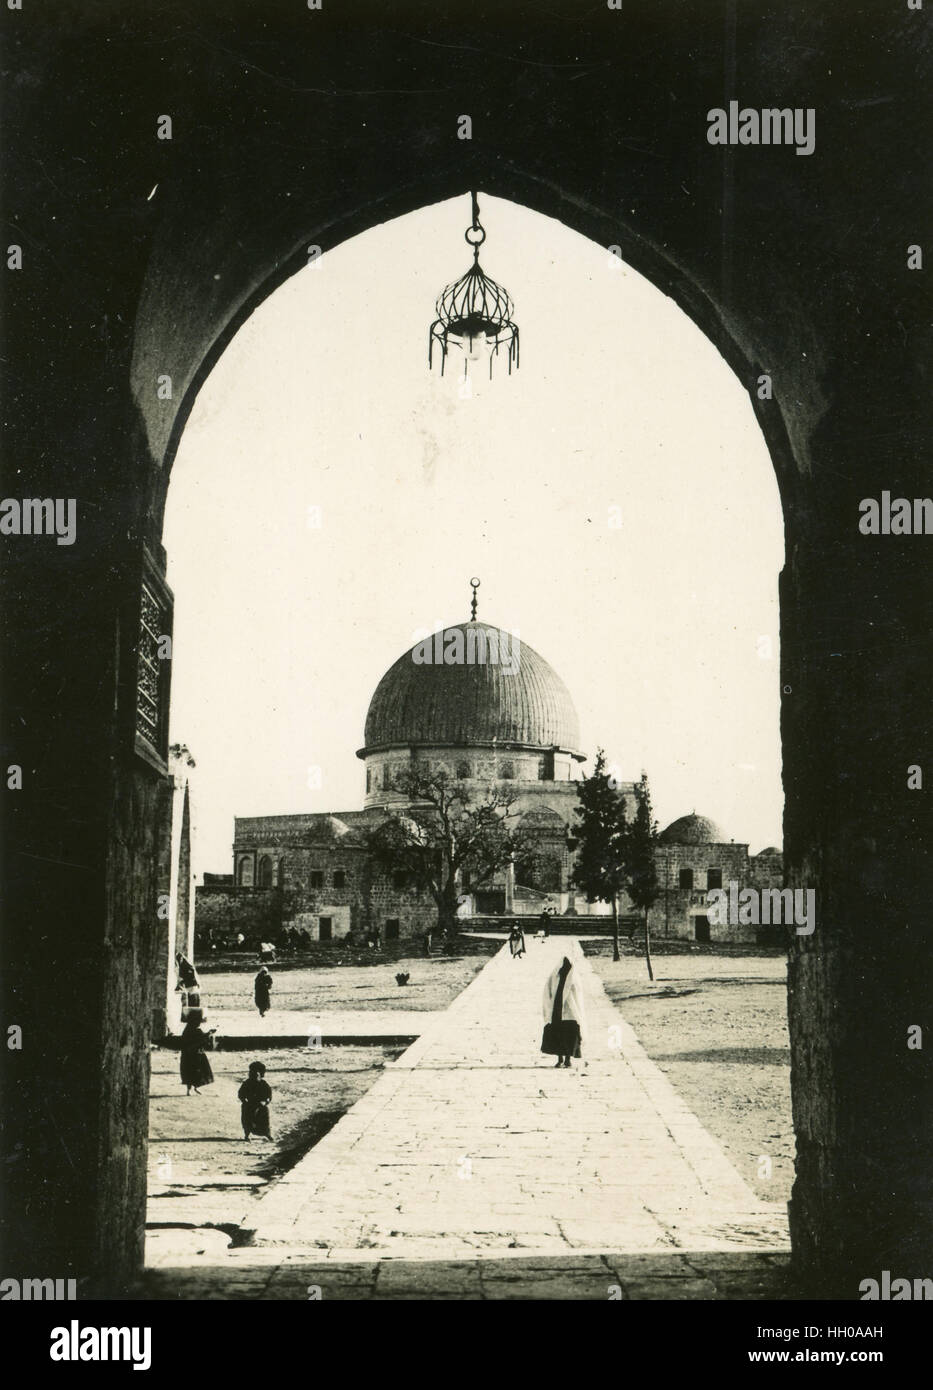 The Dome of the Rock, Mosque of Omar,Palestine, Jerusalem, Israel, 1946,West Bank, Islamic shrine, Old City of Jerusalem, Wonderful, Black and White, Stock Photo